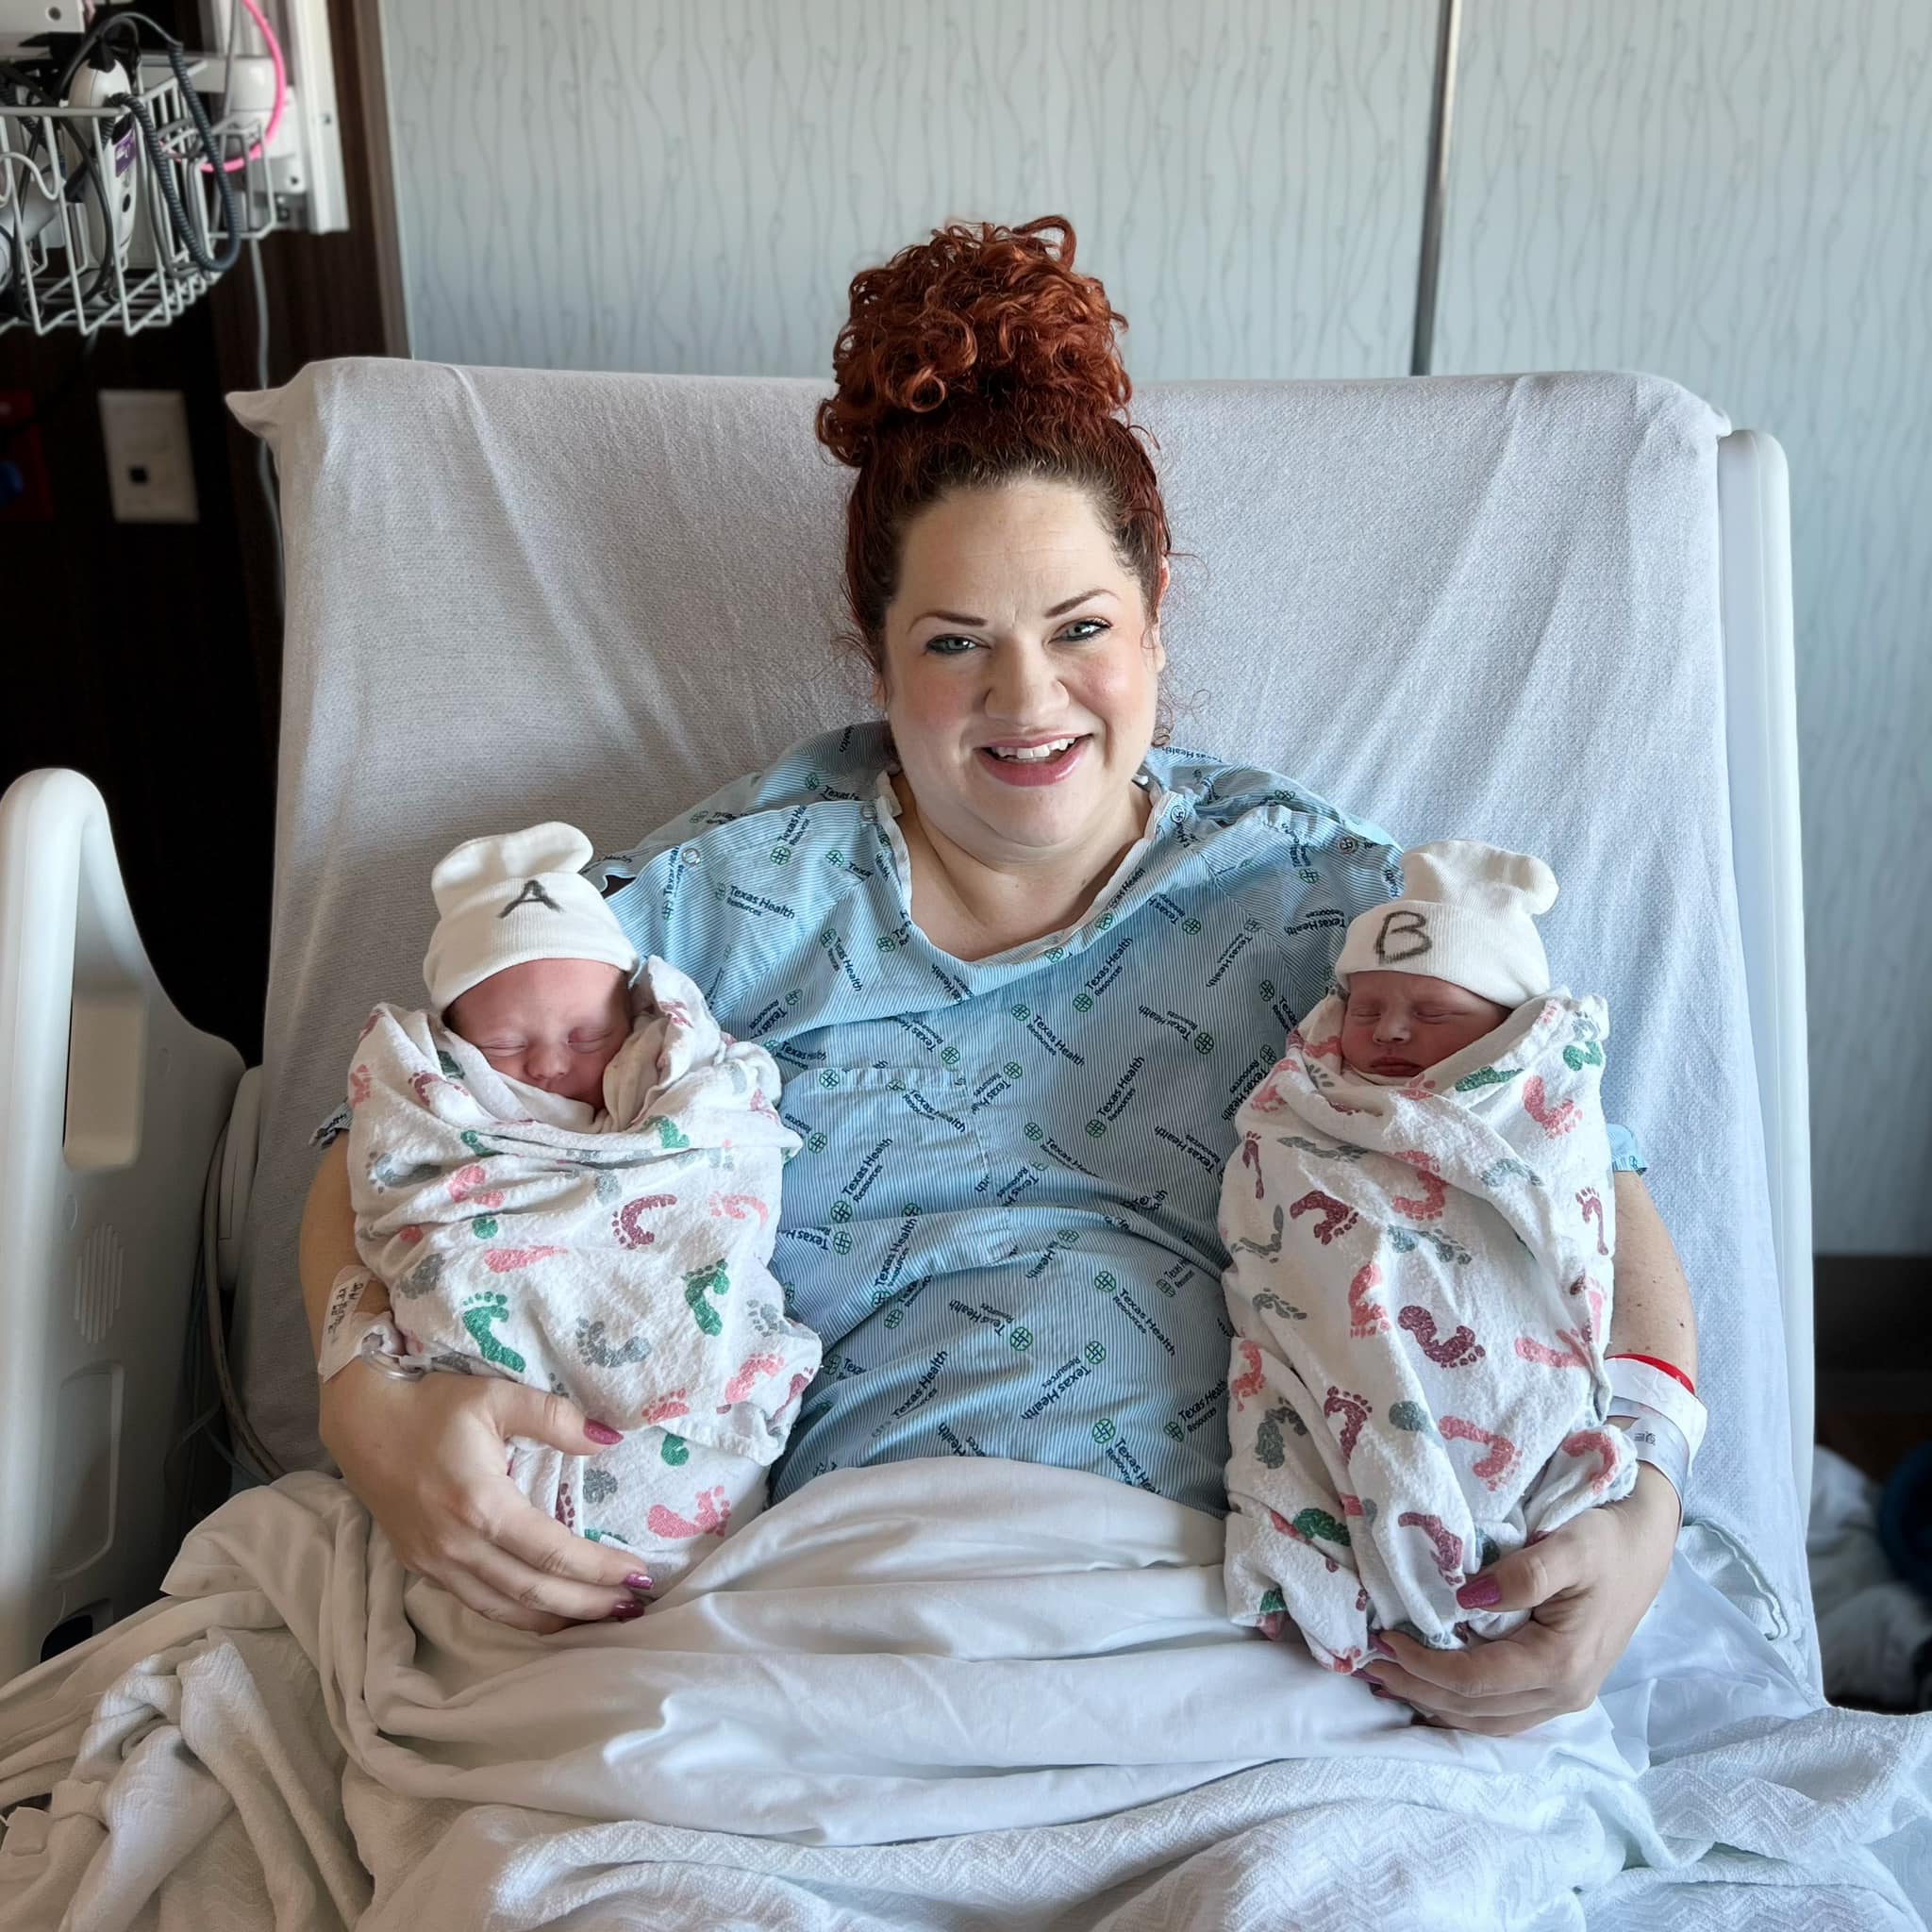 Kali Jo Scott holding her newborn twin daughters in the hospital.